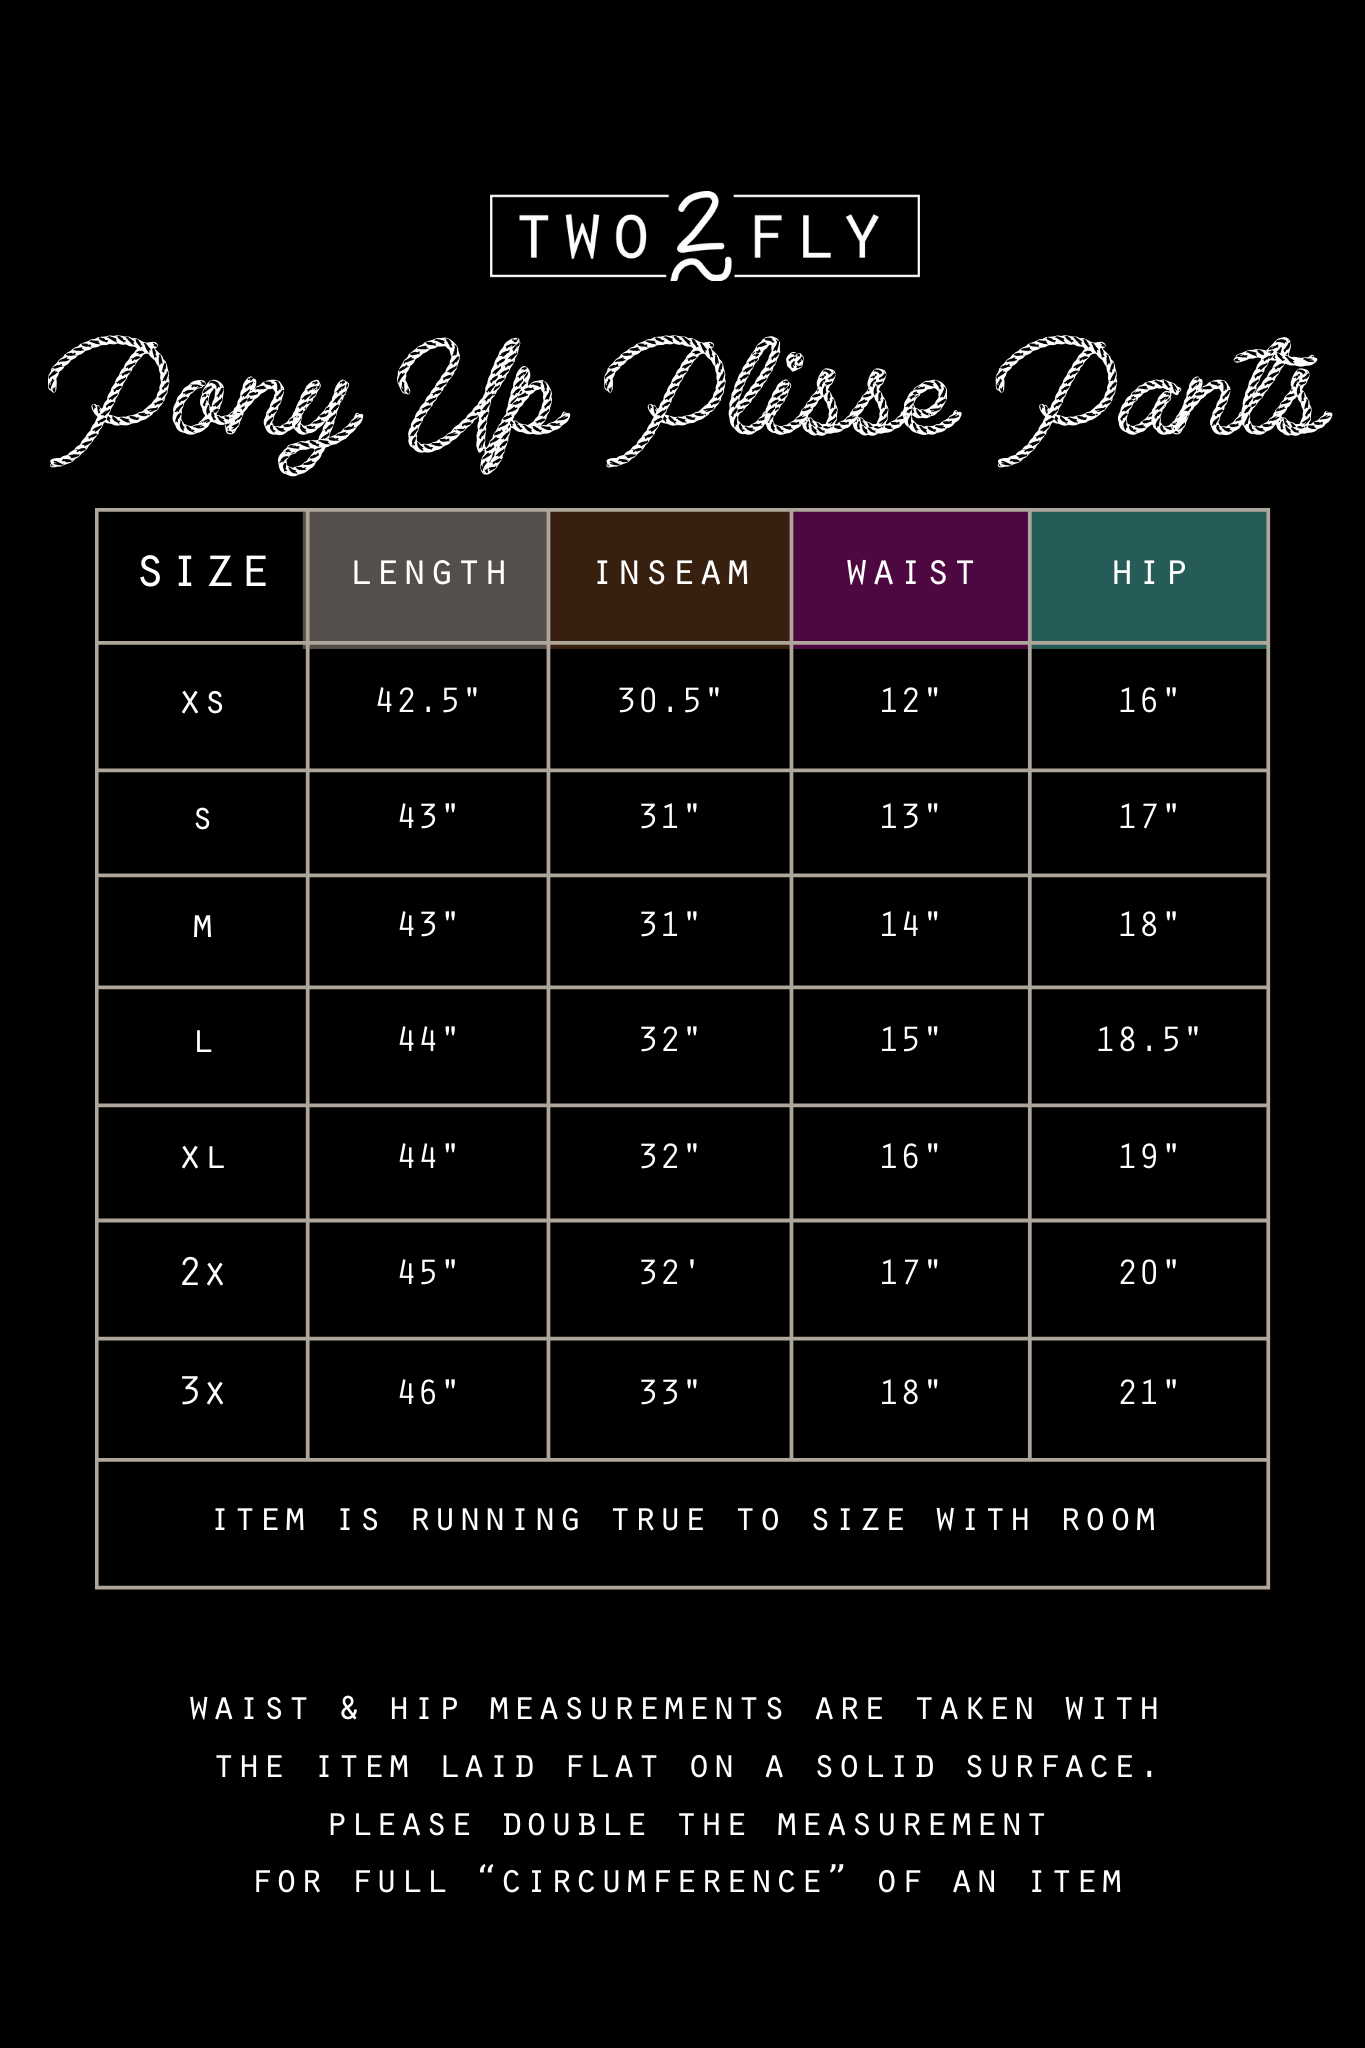 PONY UP PLISSE PANT * TAUPE [missing sizes]